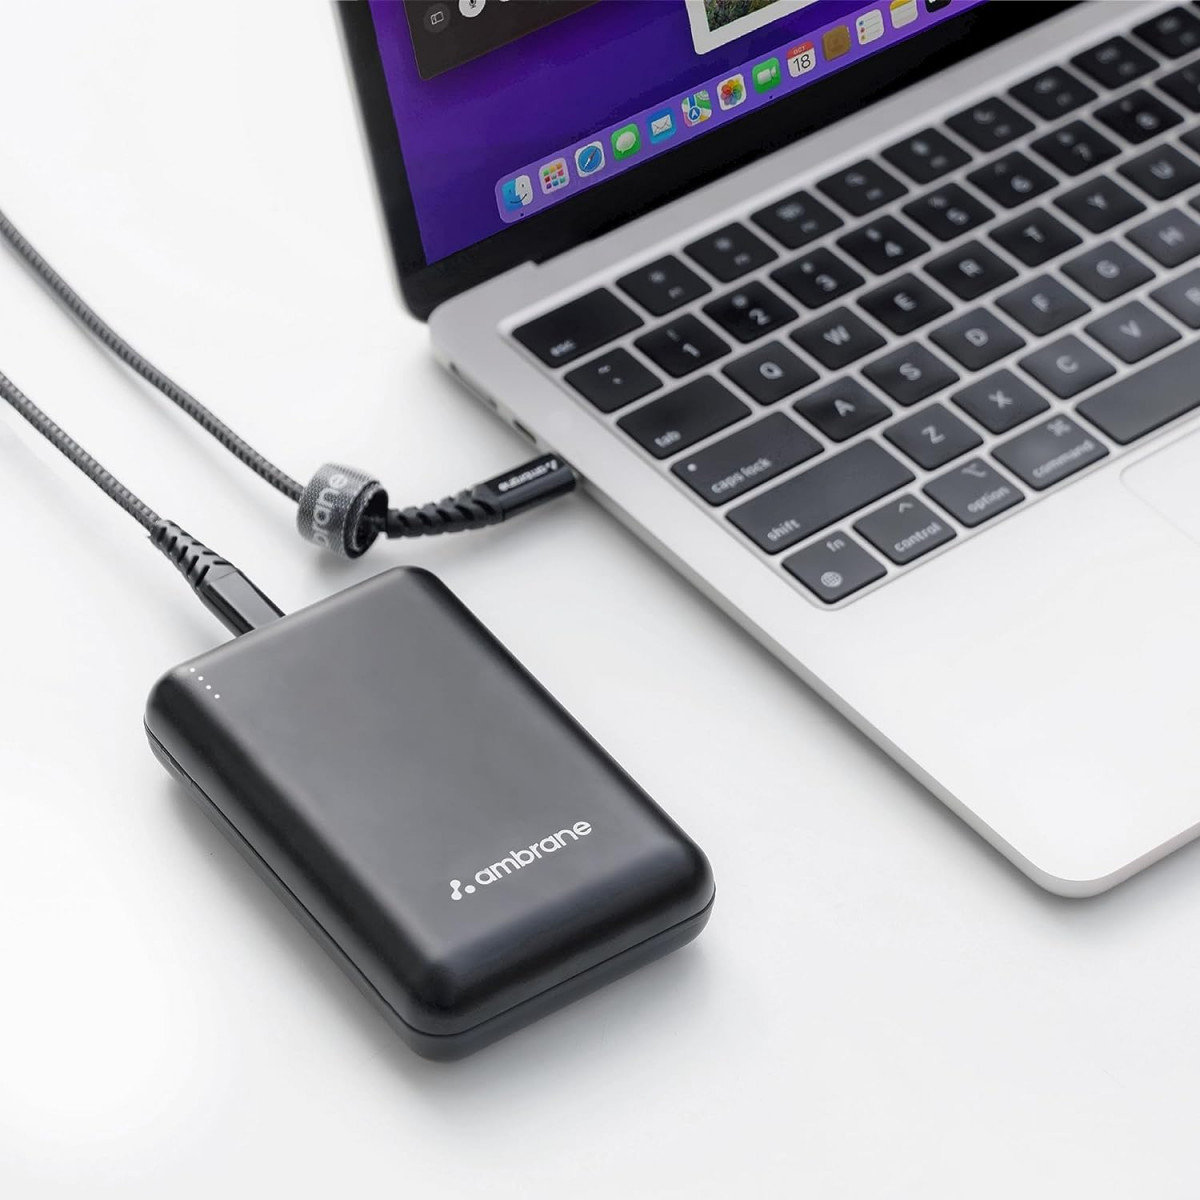 Ambrane 60W Fast Charging Powerbank for MacBook Type C Laptop  Mobile Charging Lithium Ion Battery Metallic Body